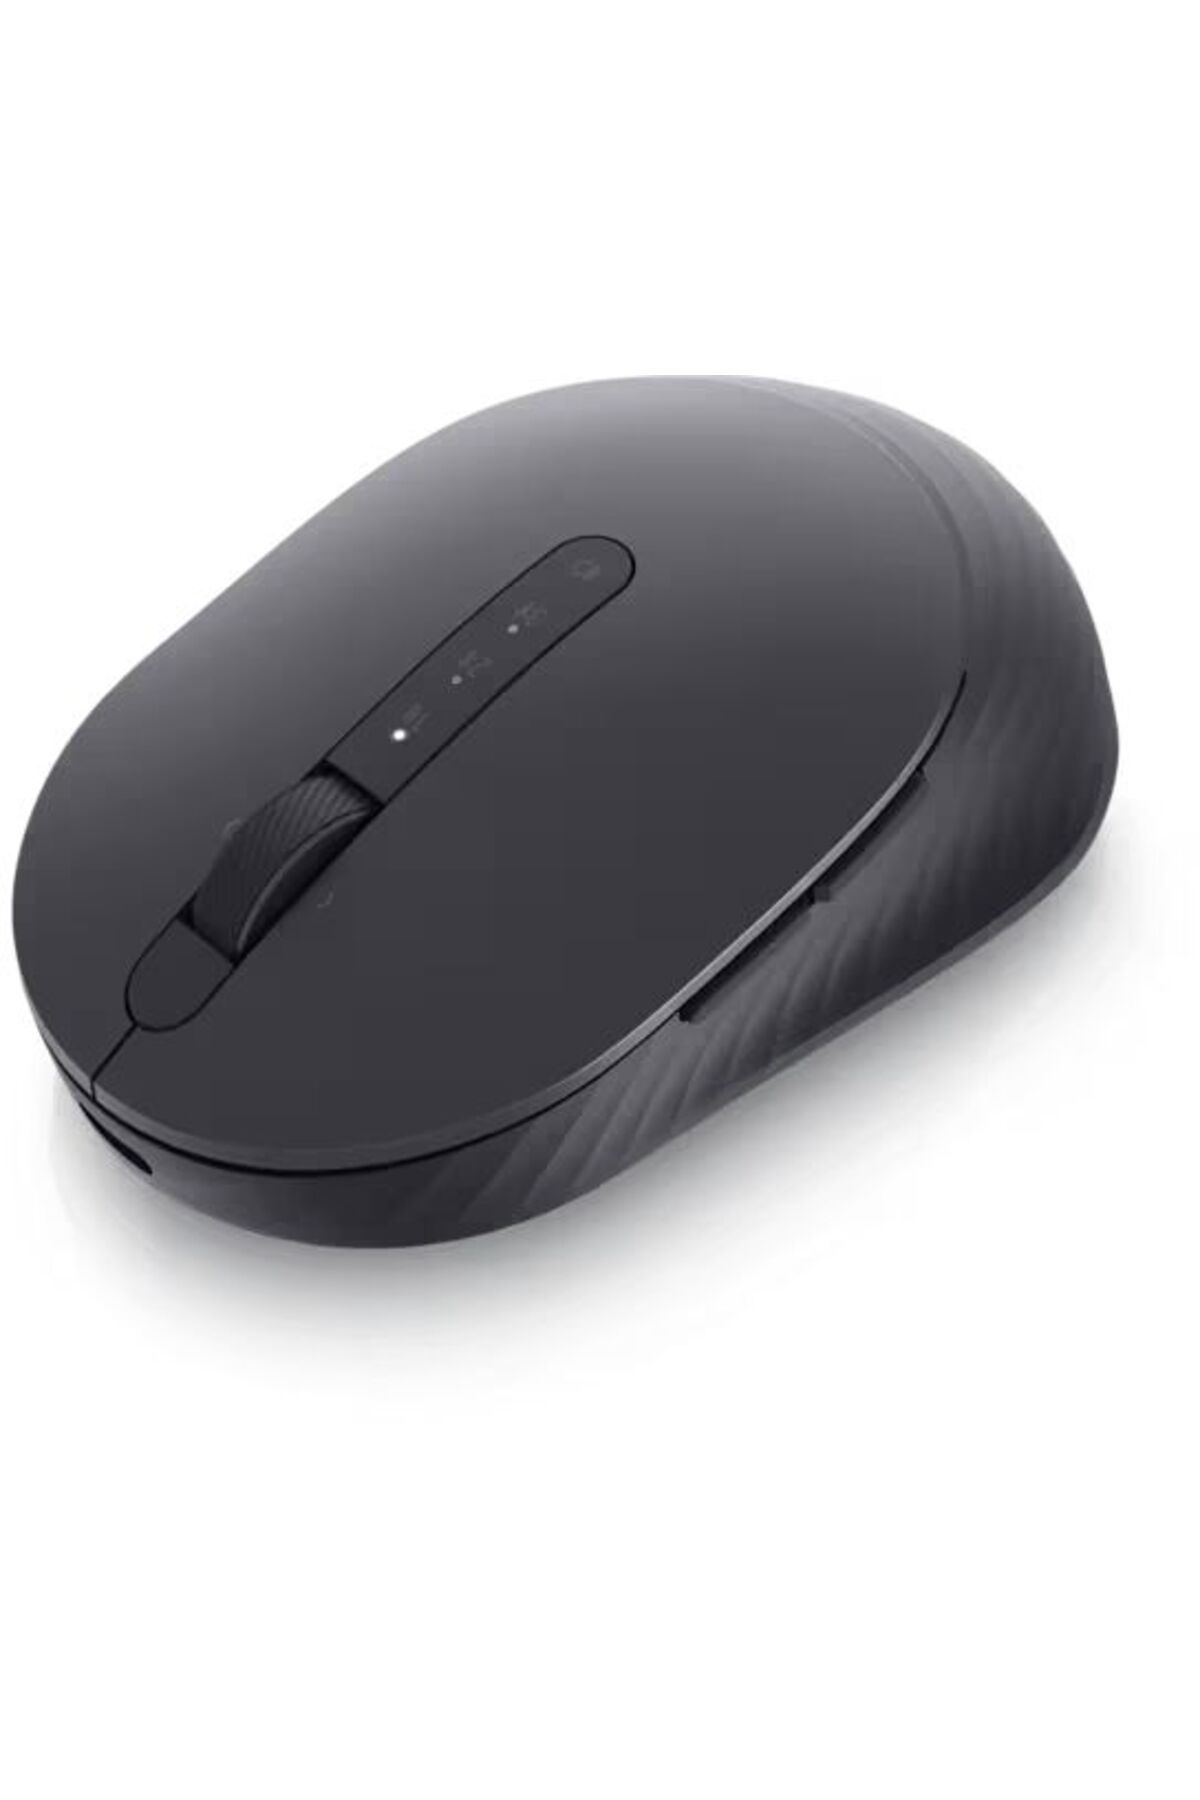 Dell Pre Wıreless Mouse Psılver Ms7421w 570-bbdm